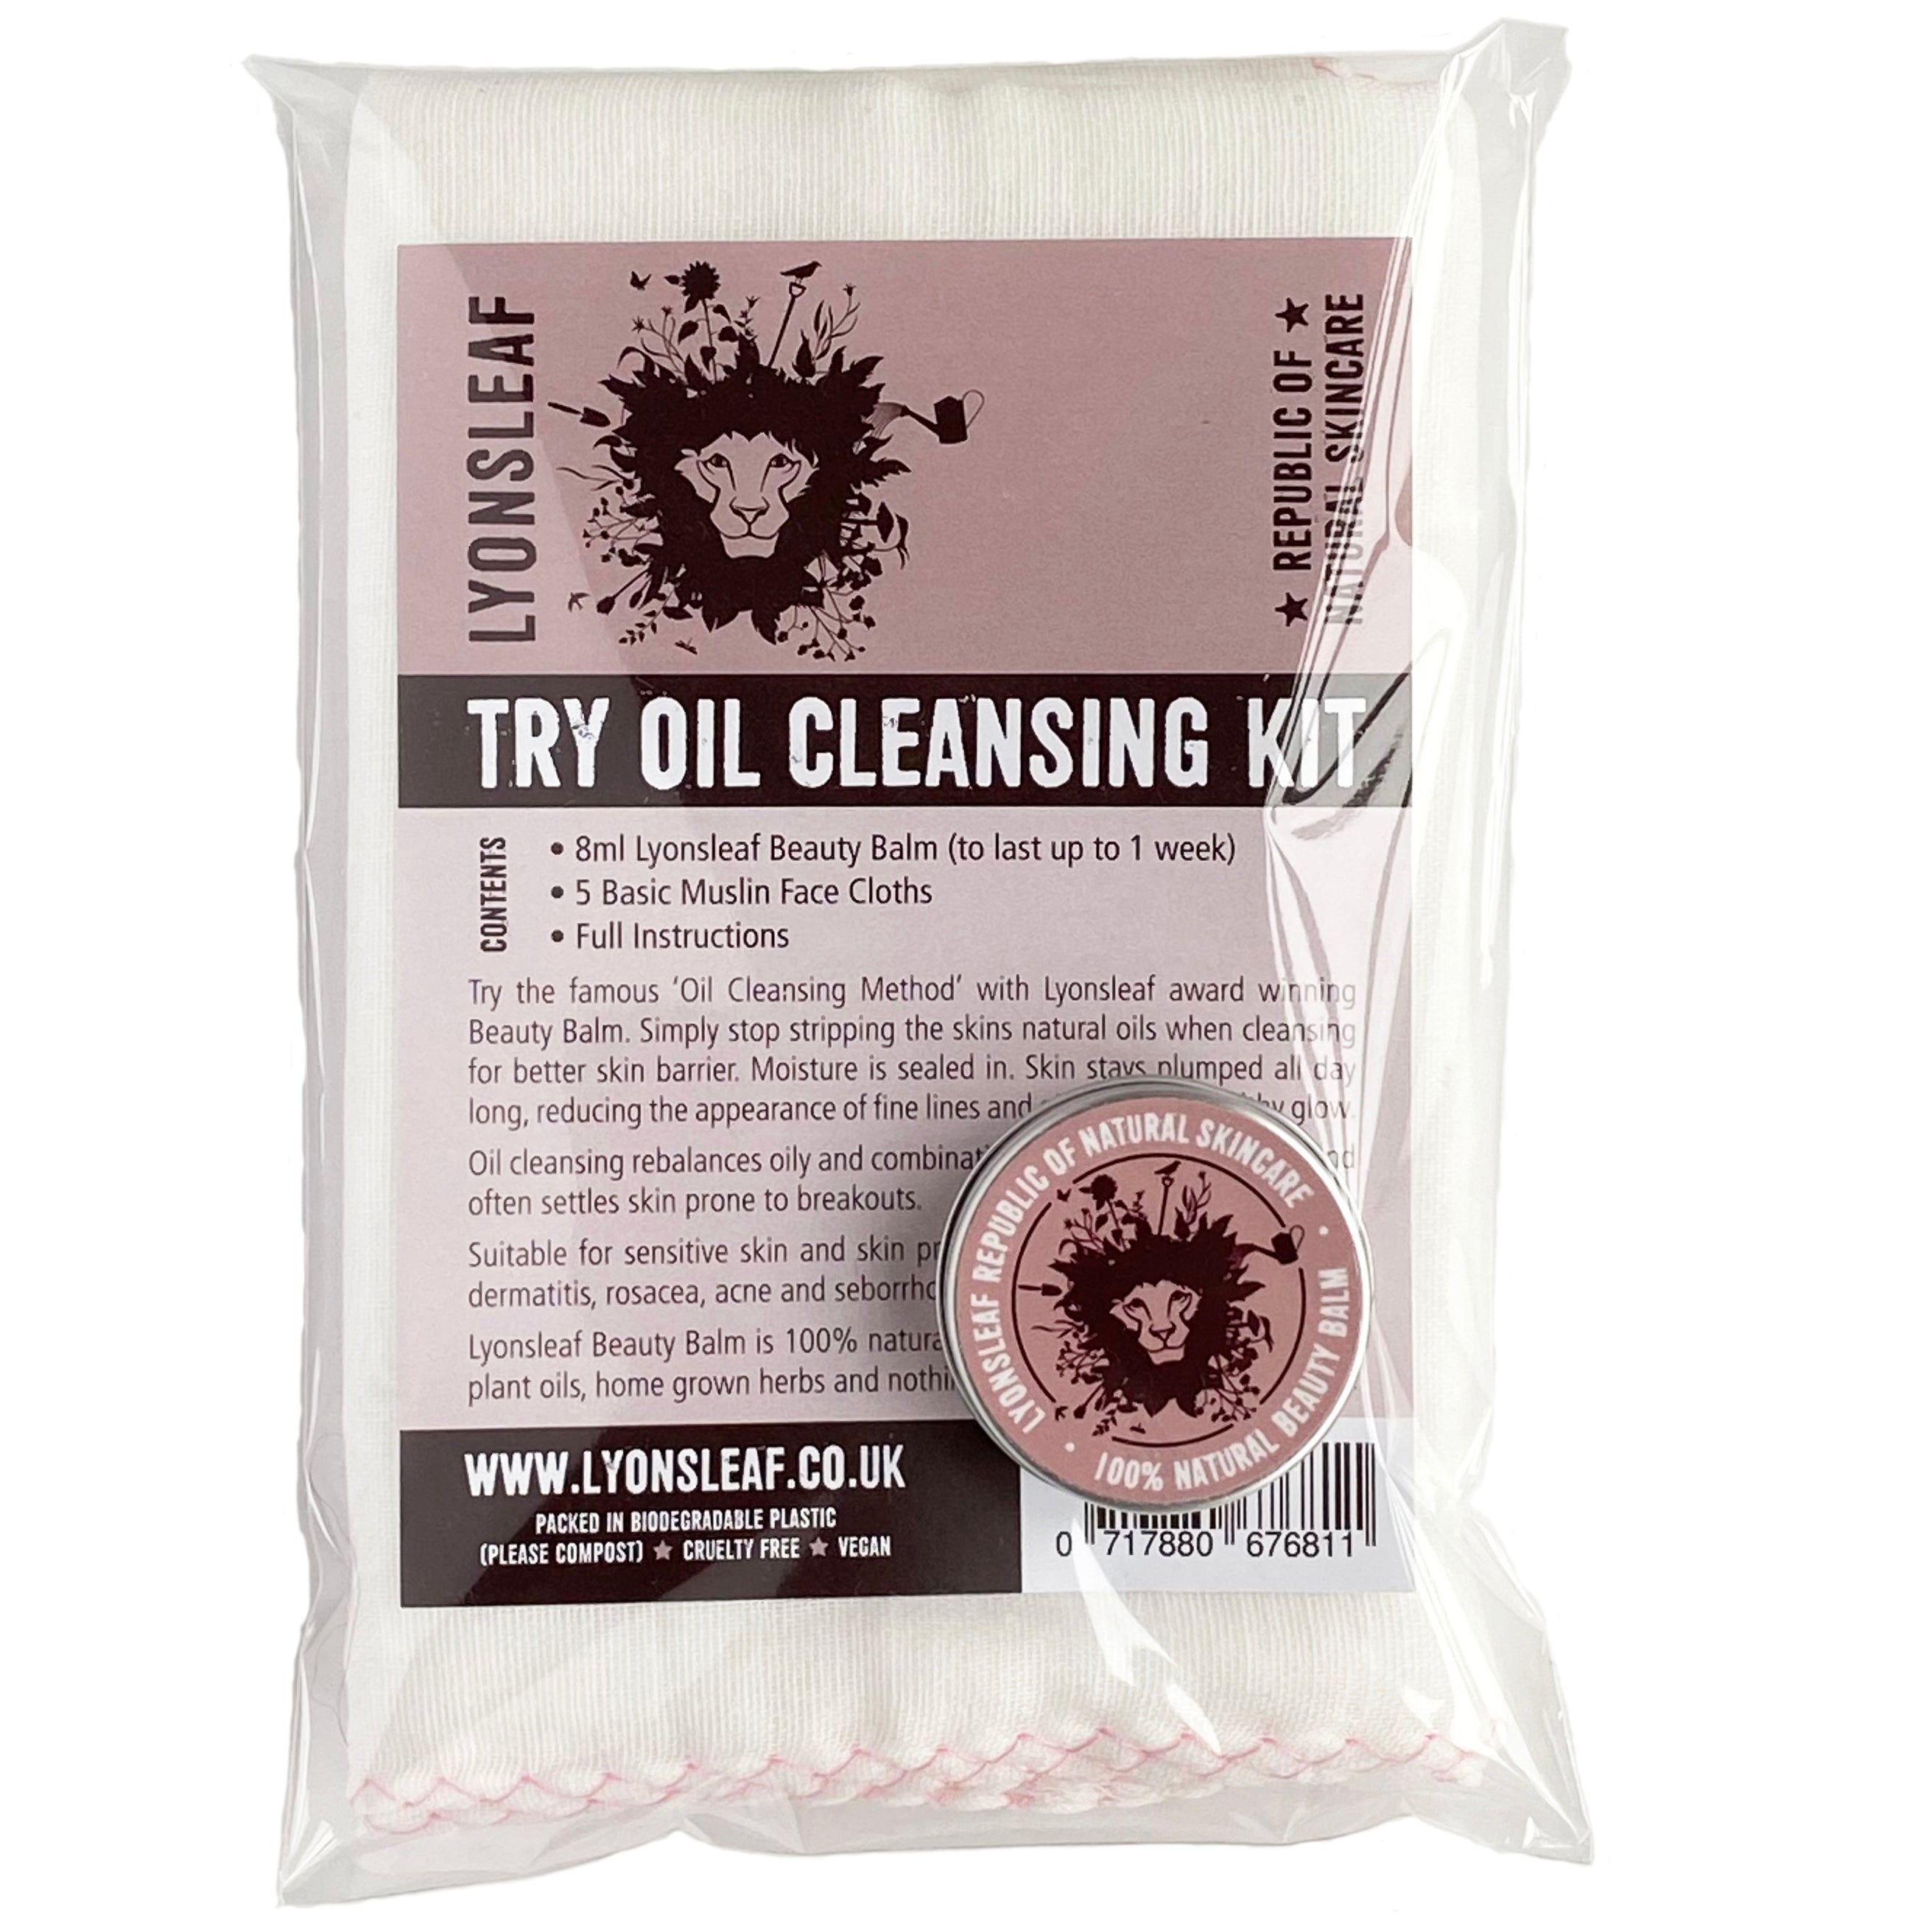 Try Oil Cleansing kit